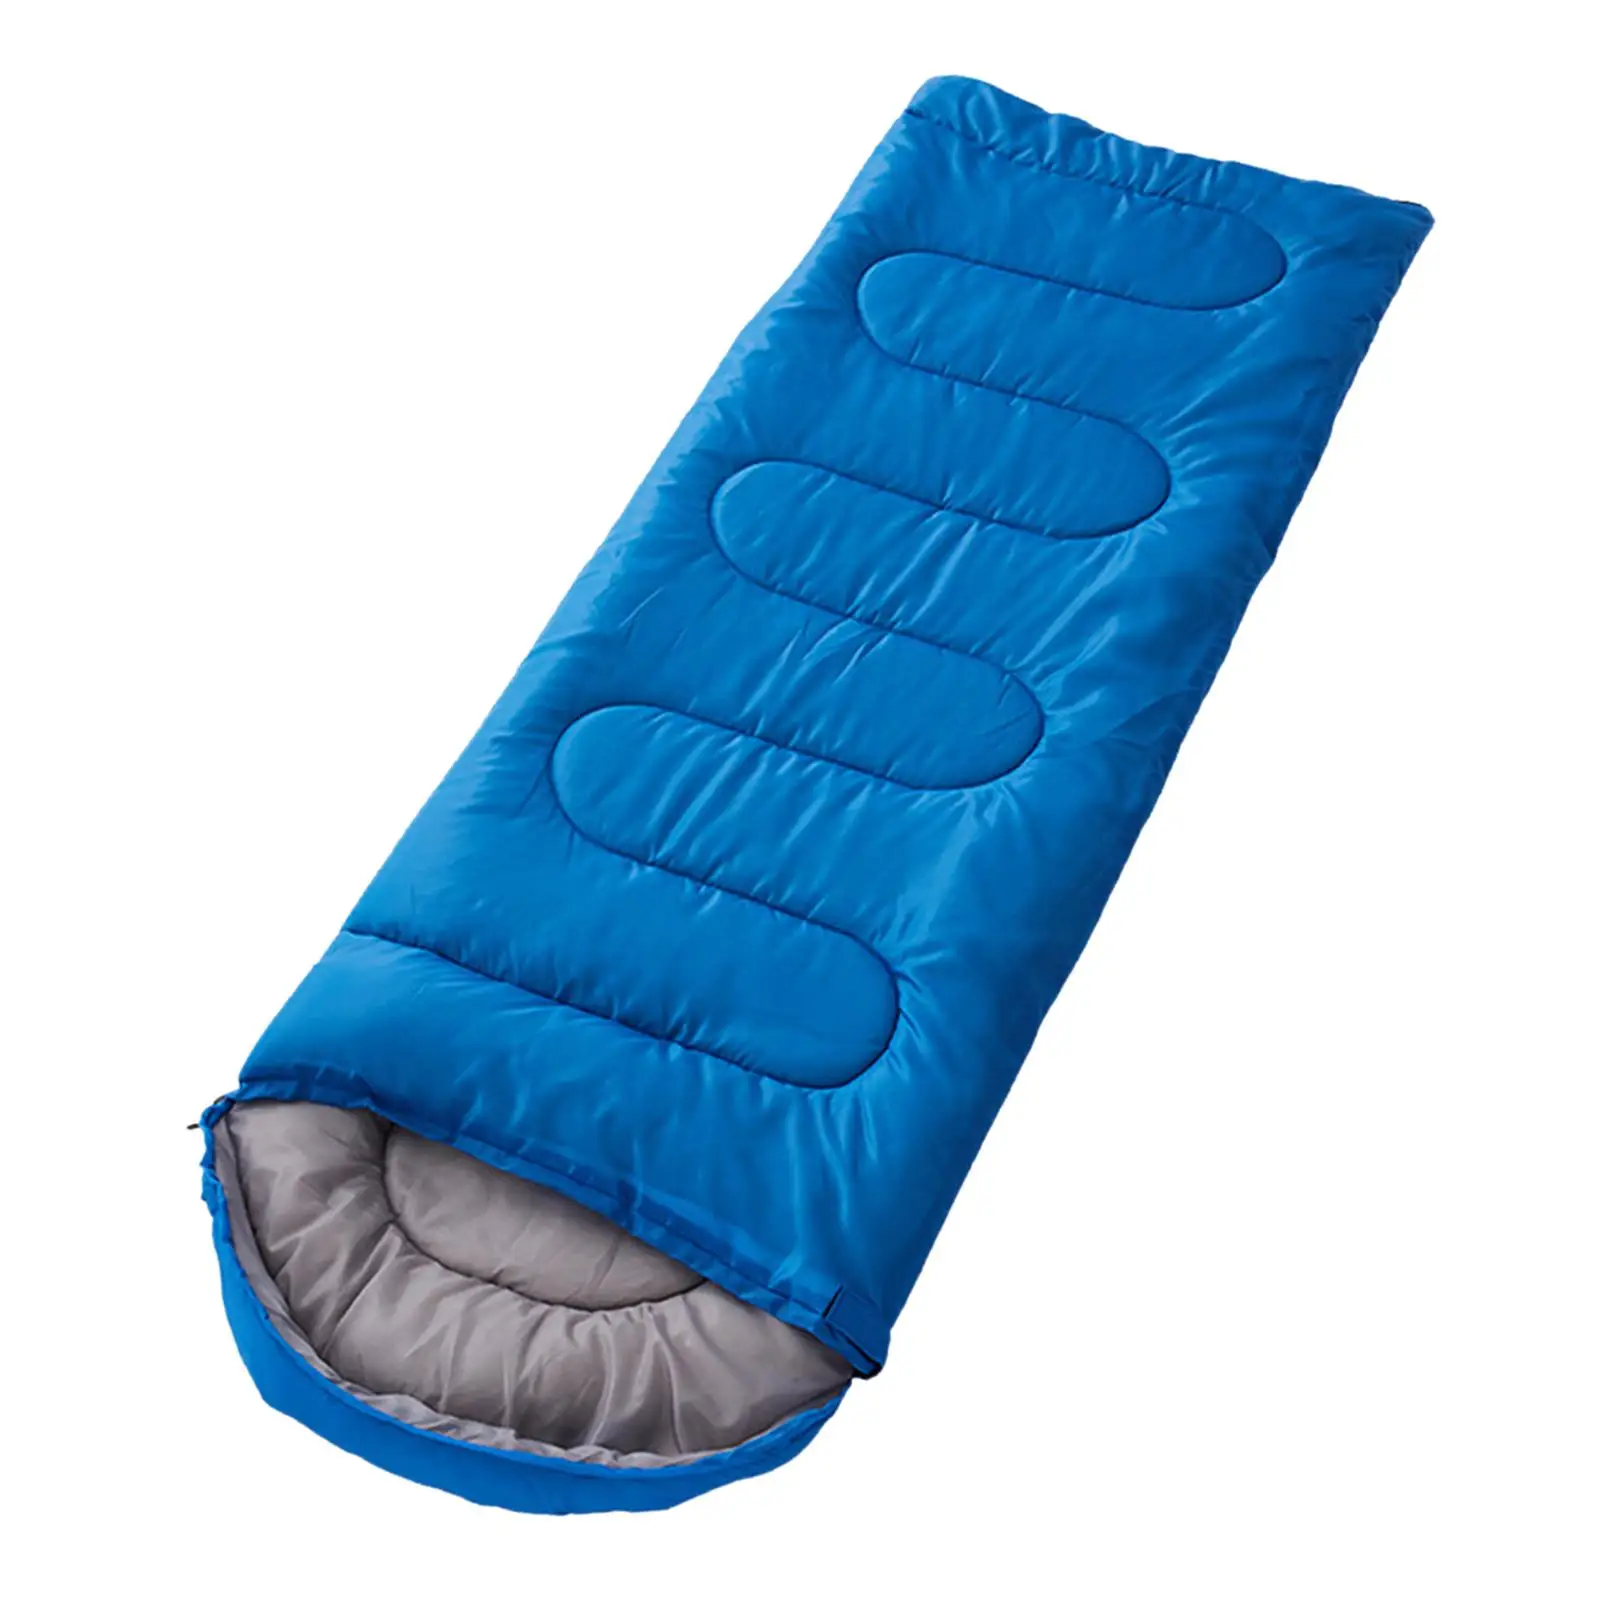 Envelope Travel Sleeping Bag Warm Zip Polyester Comfortable Padded Bag for Men Survival Indoor Hiking Cold Weather